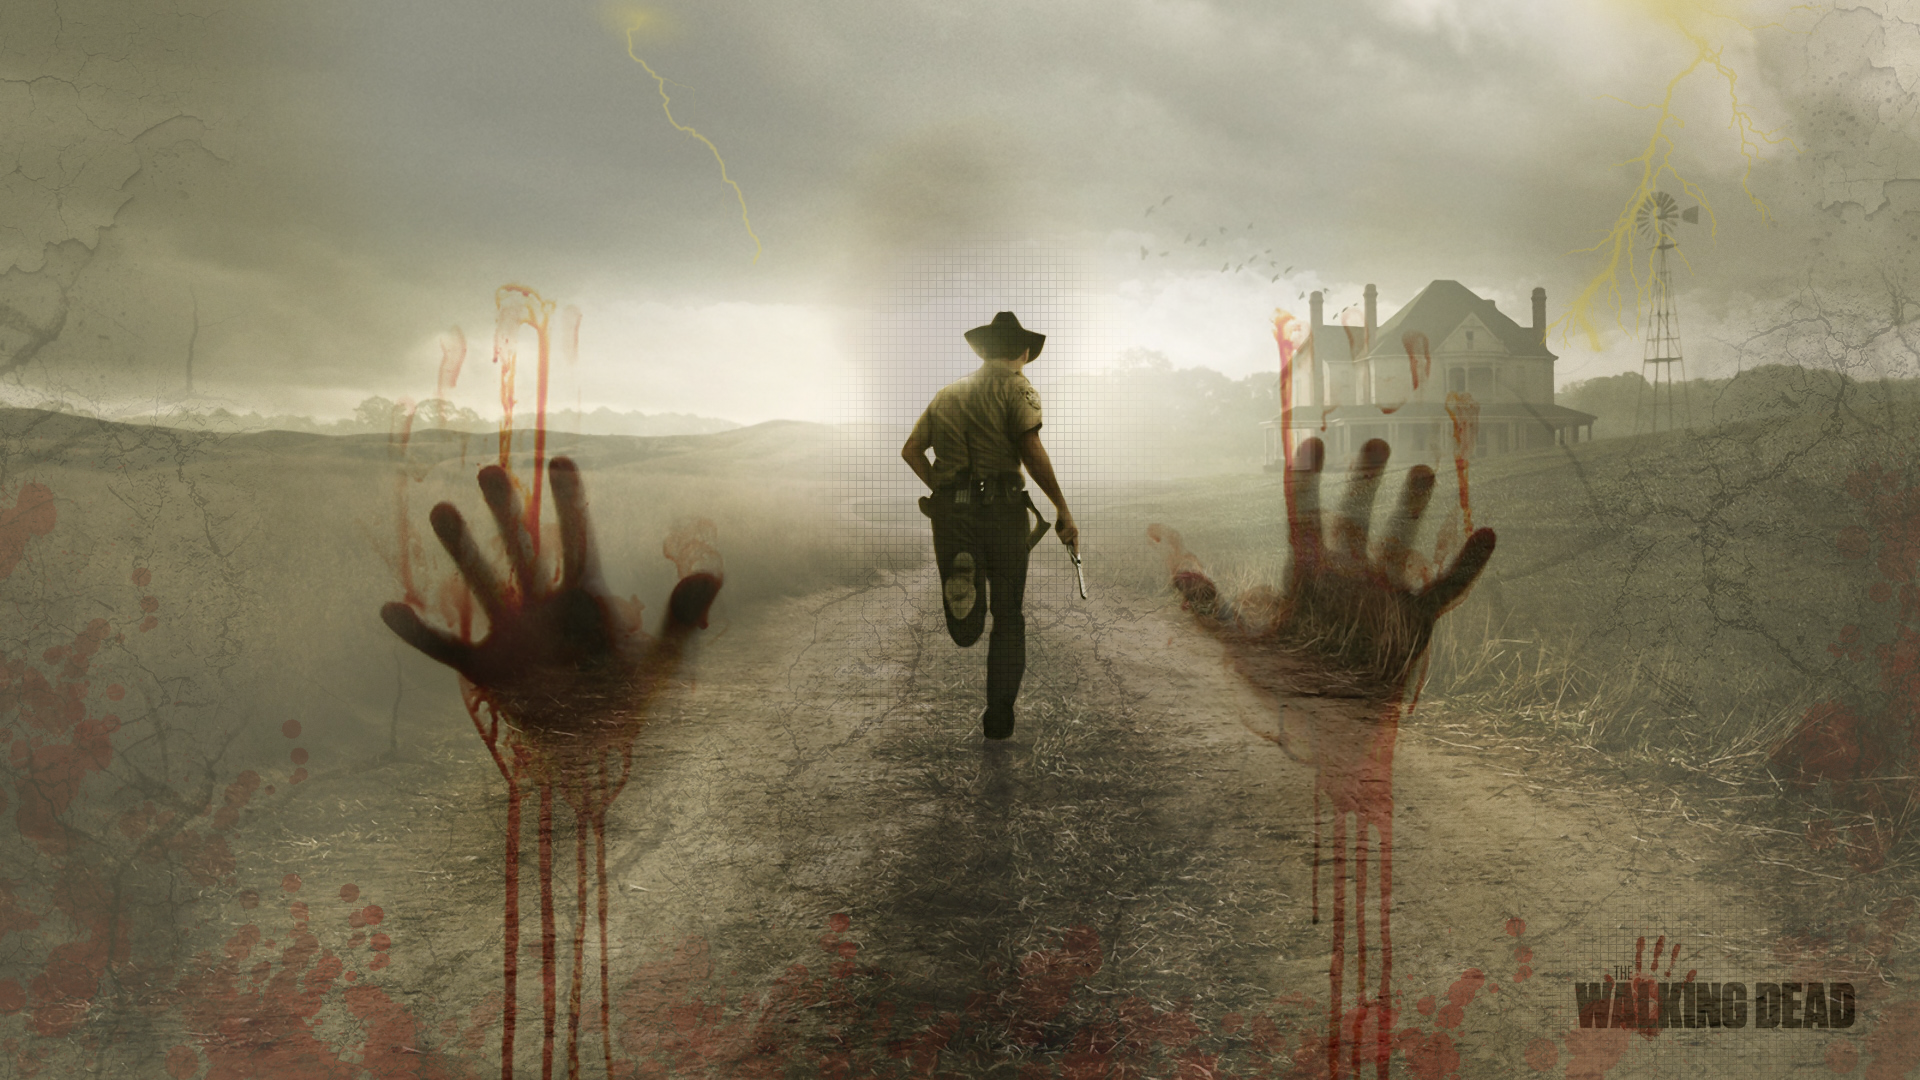 Walking Dead Wallpaper For Android iOeC www.wallhdwall.com